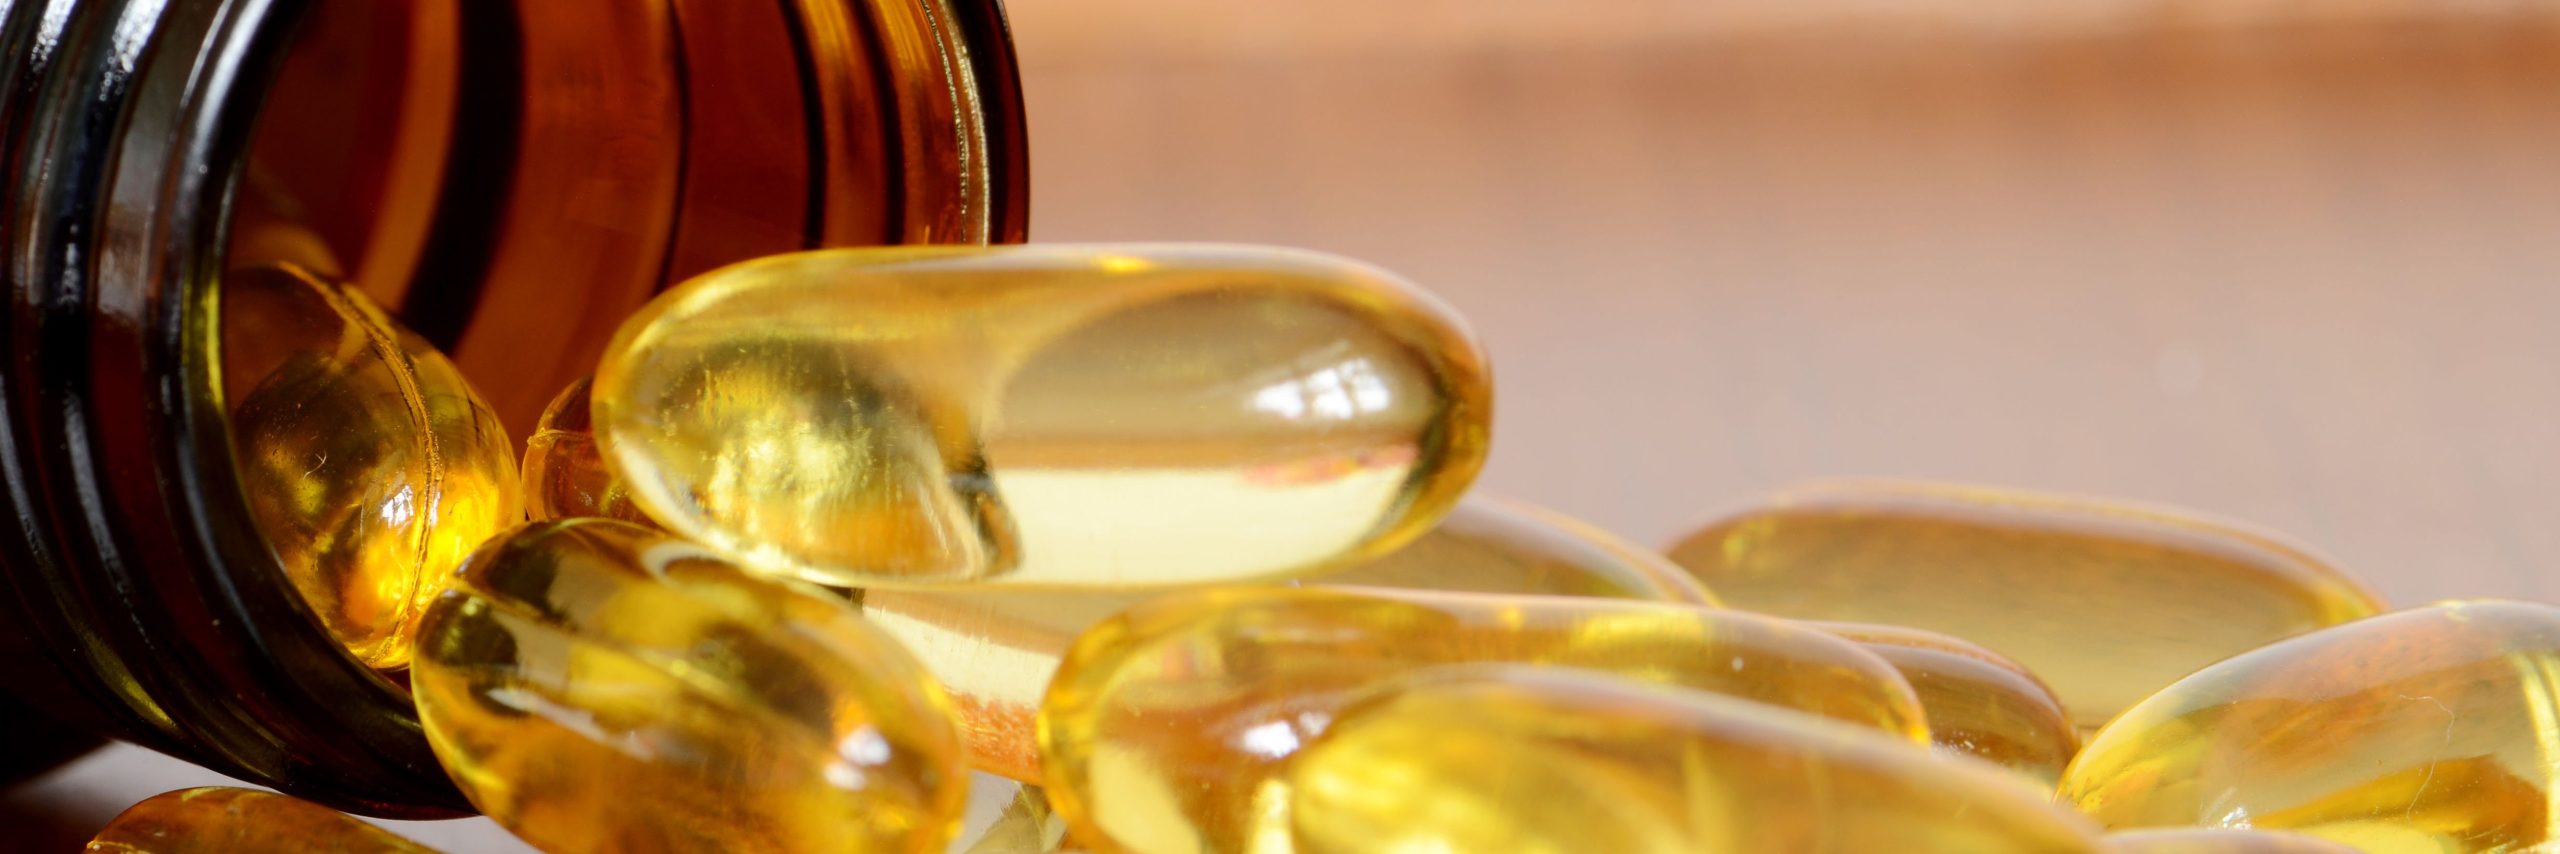 Probiotic, Vitamin D Supplementation Tied to Benefits for Schizophrenia